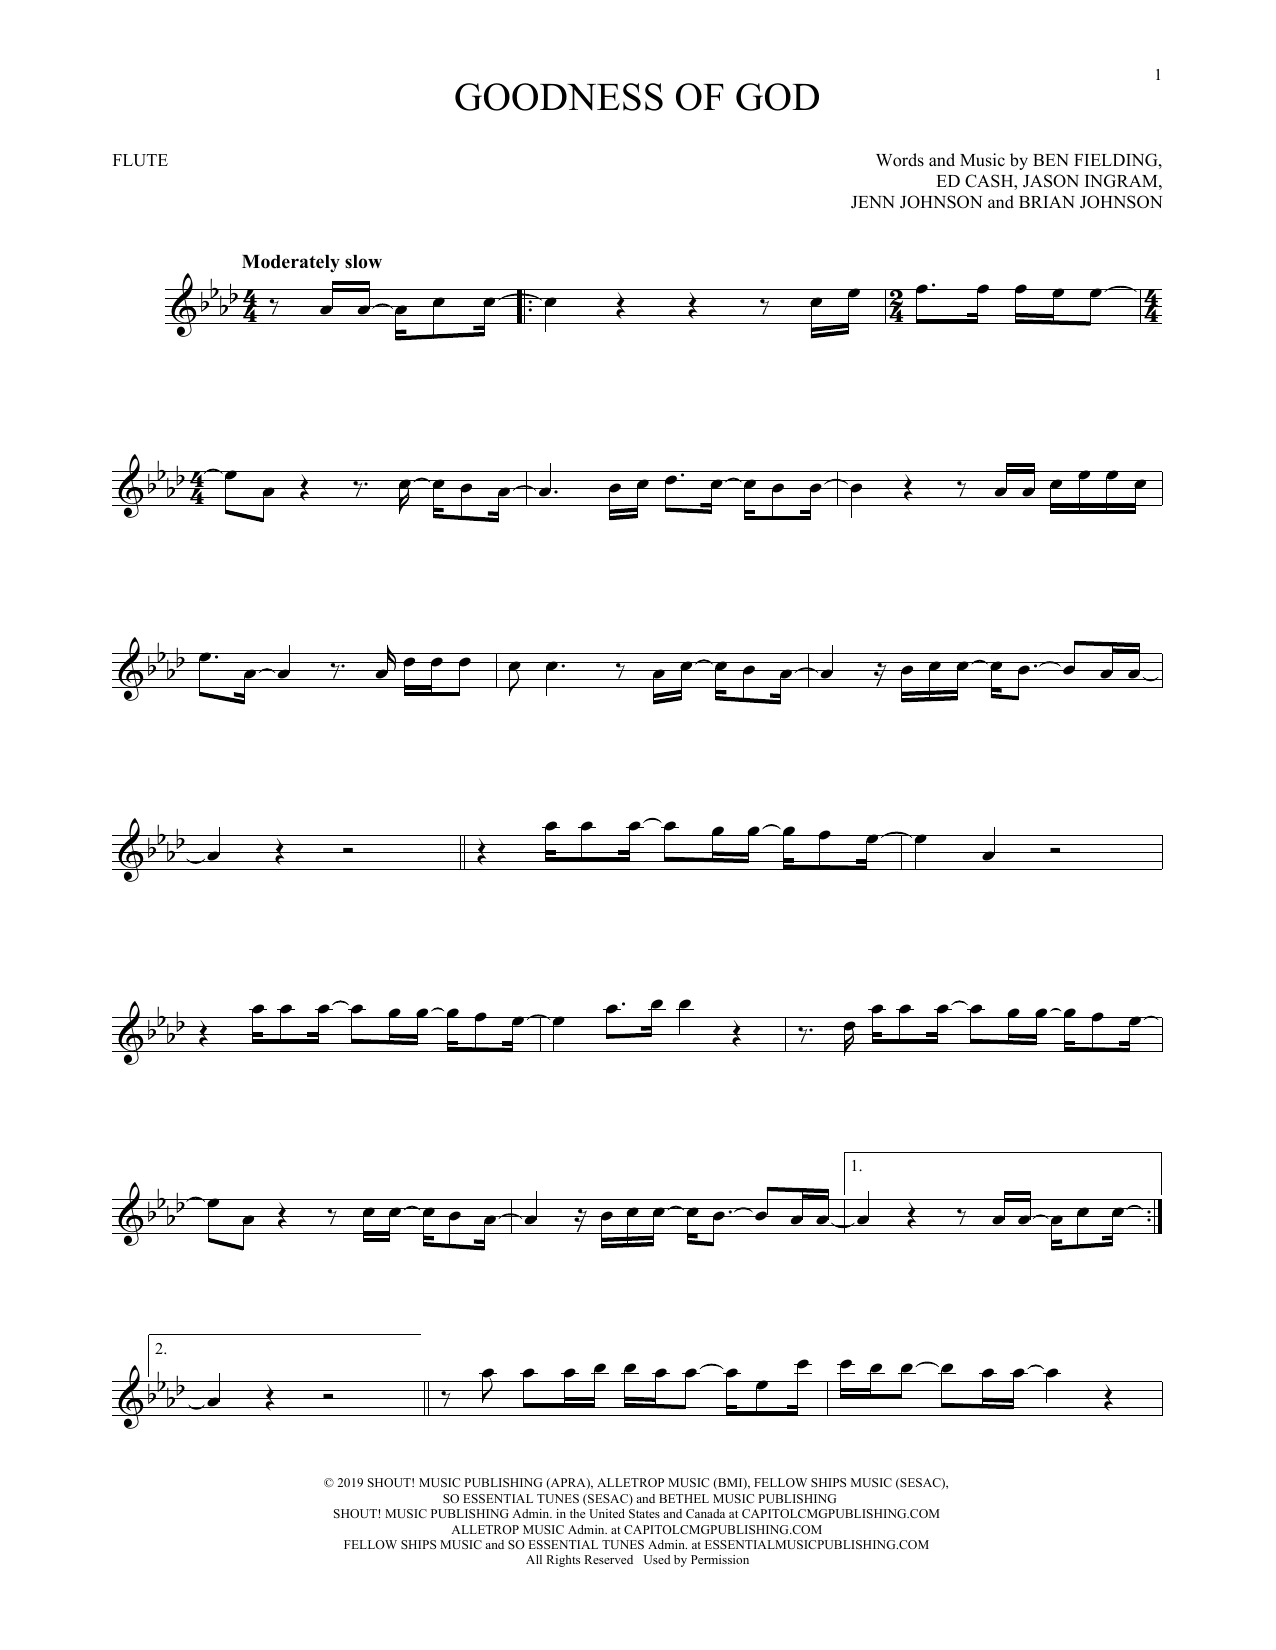 Bethel Music and Jenn Johnson Goodness Of God sheet music notes printable PDF score